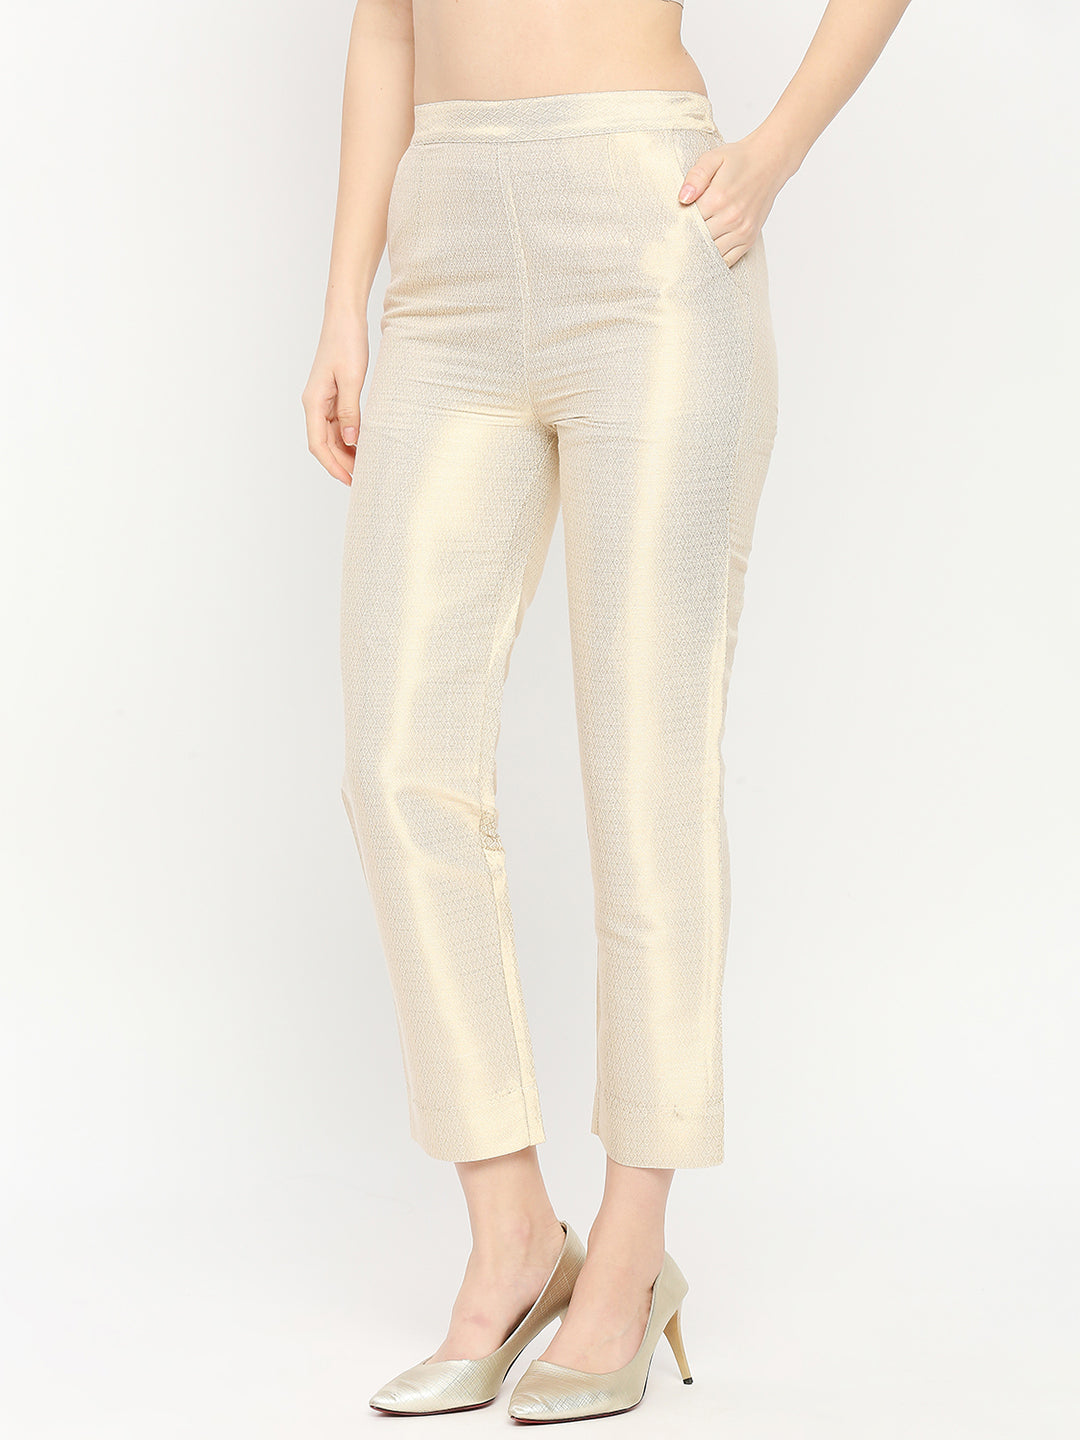 Buy Gold Jacquard Slim Pants Online - W for Woman